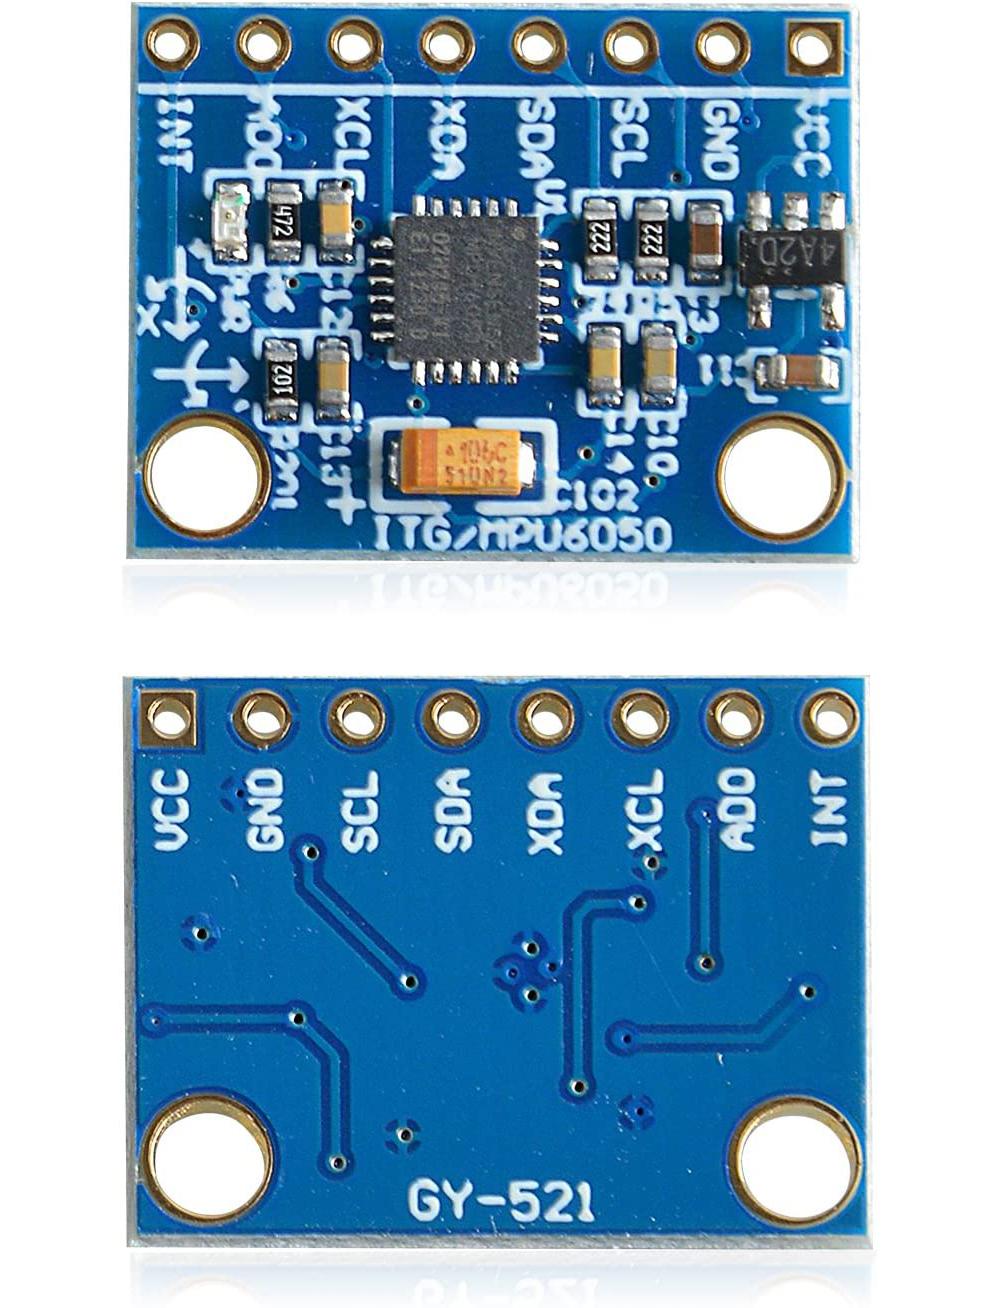 MPU-6050 Module GY521 3 Axis Gyroscope+Accelerometer Module For Arduino In UK